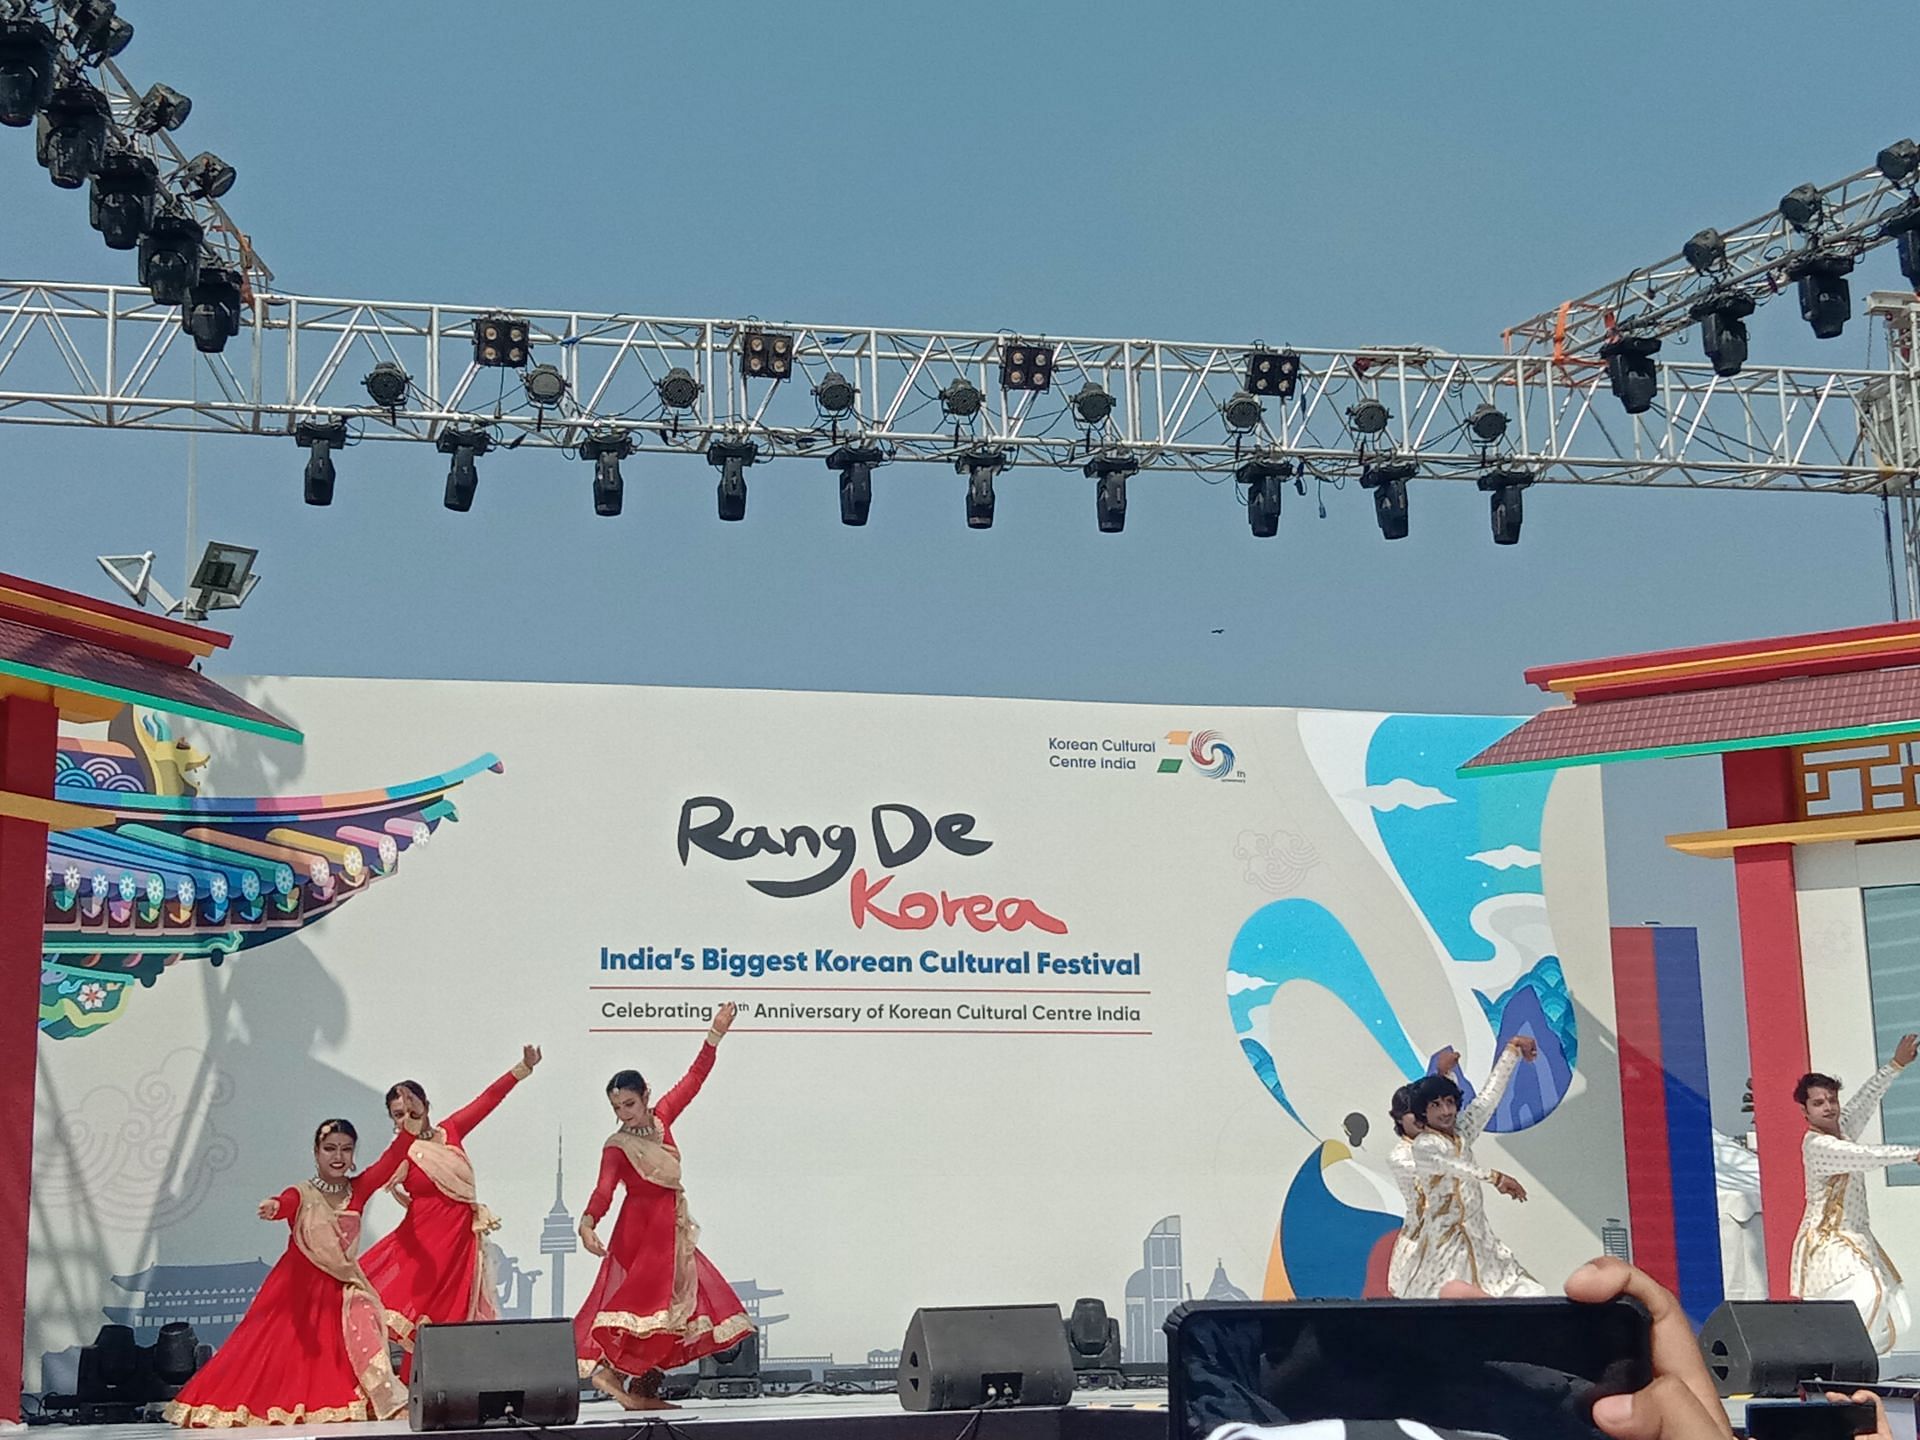 Indian classical dance performance at Rang De Korea (Image via Sportskeeda)caption